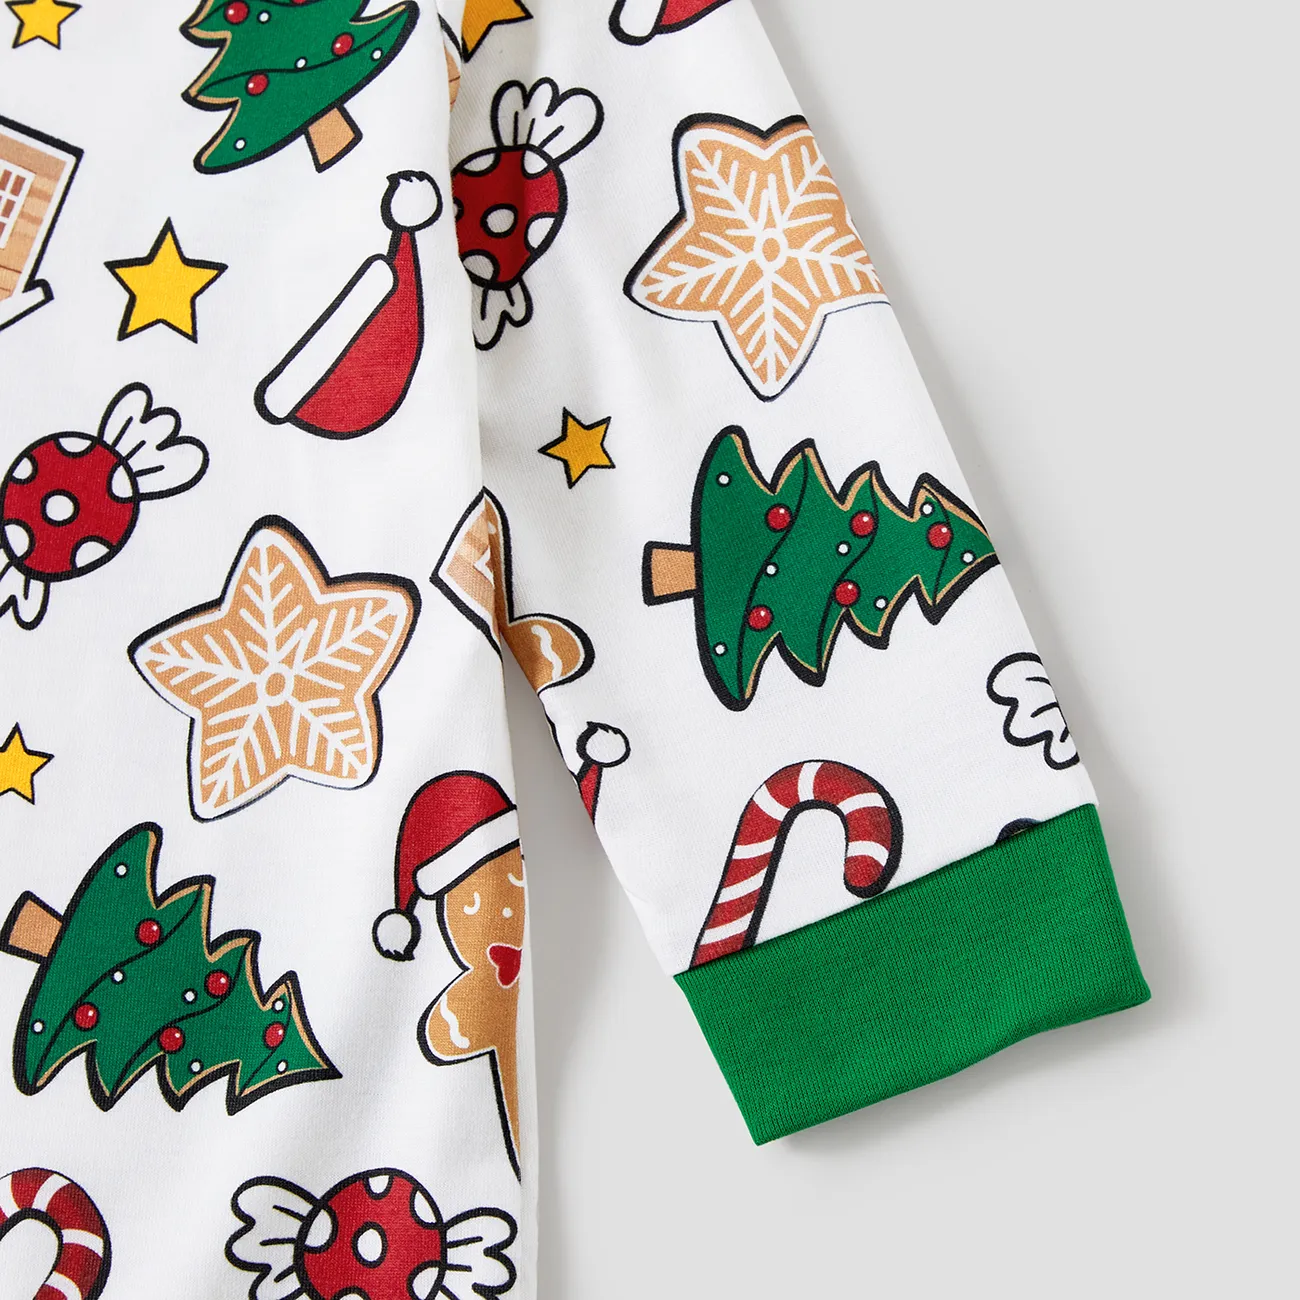 Navidad Looks familiares Manga larga Conjuntos combinados para familia Pijamas (Flame Resistant) Multicolor big image 1